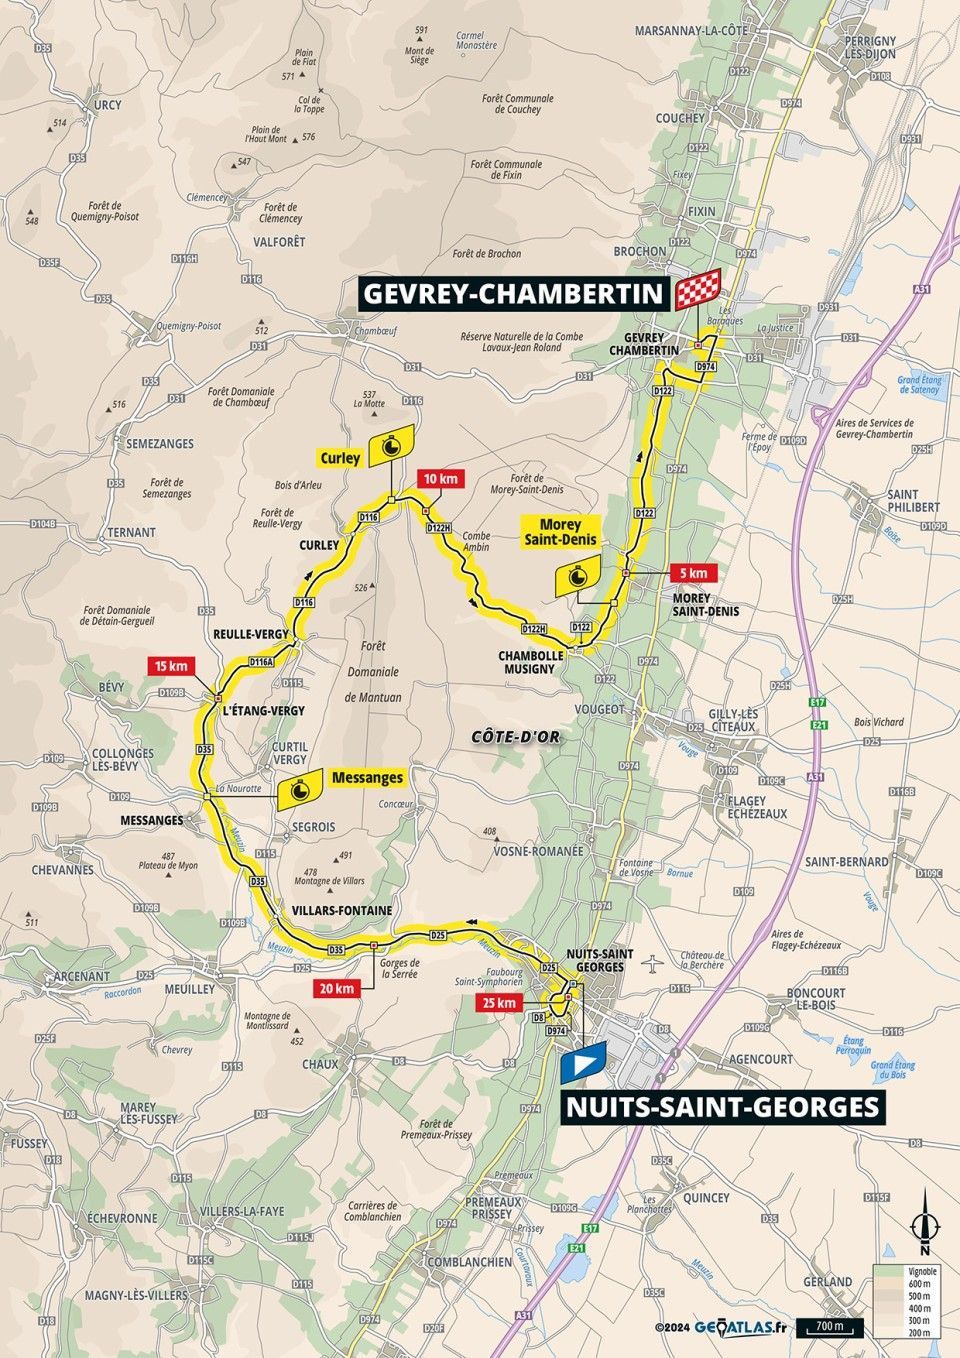 PREVIEW | Tour de France 2024 stage 7 - Time-trial battle between Tadej Pogacar, Jonas Vingegaard, Remco Evenepoel and Primoz Roglic